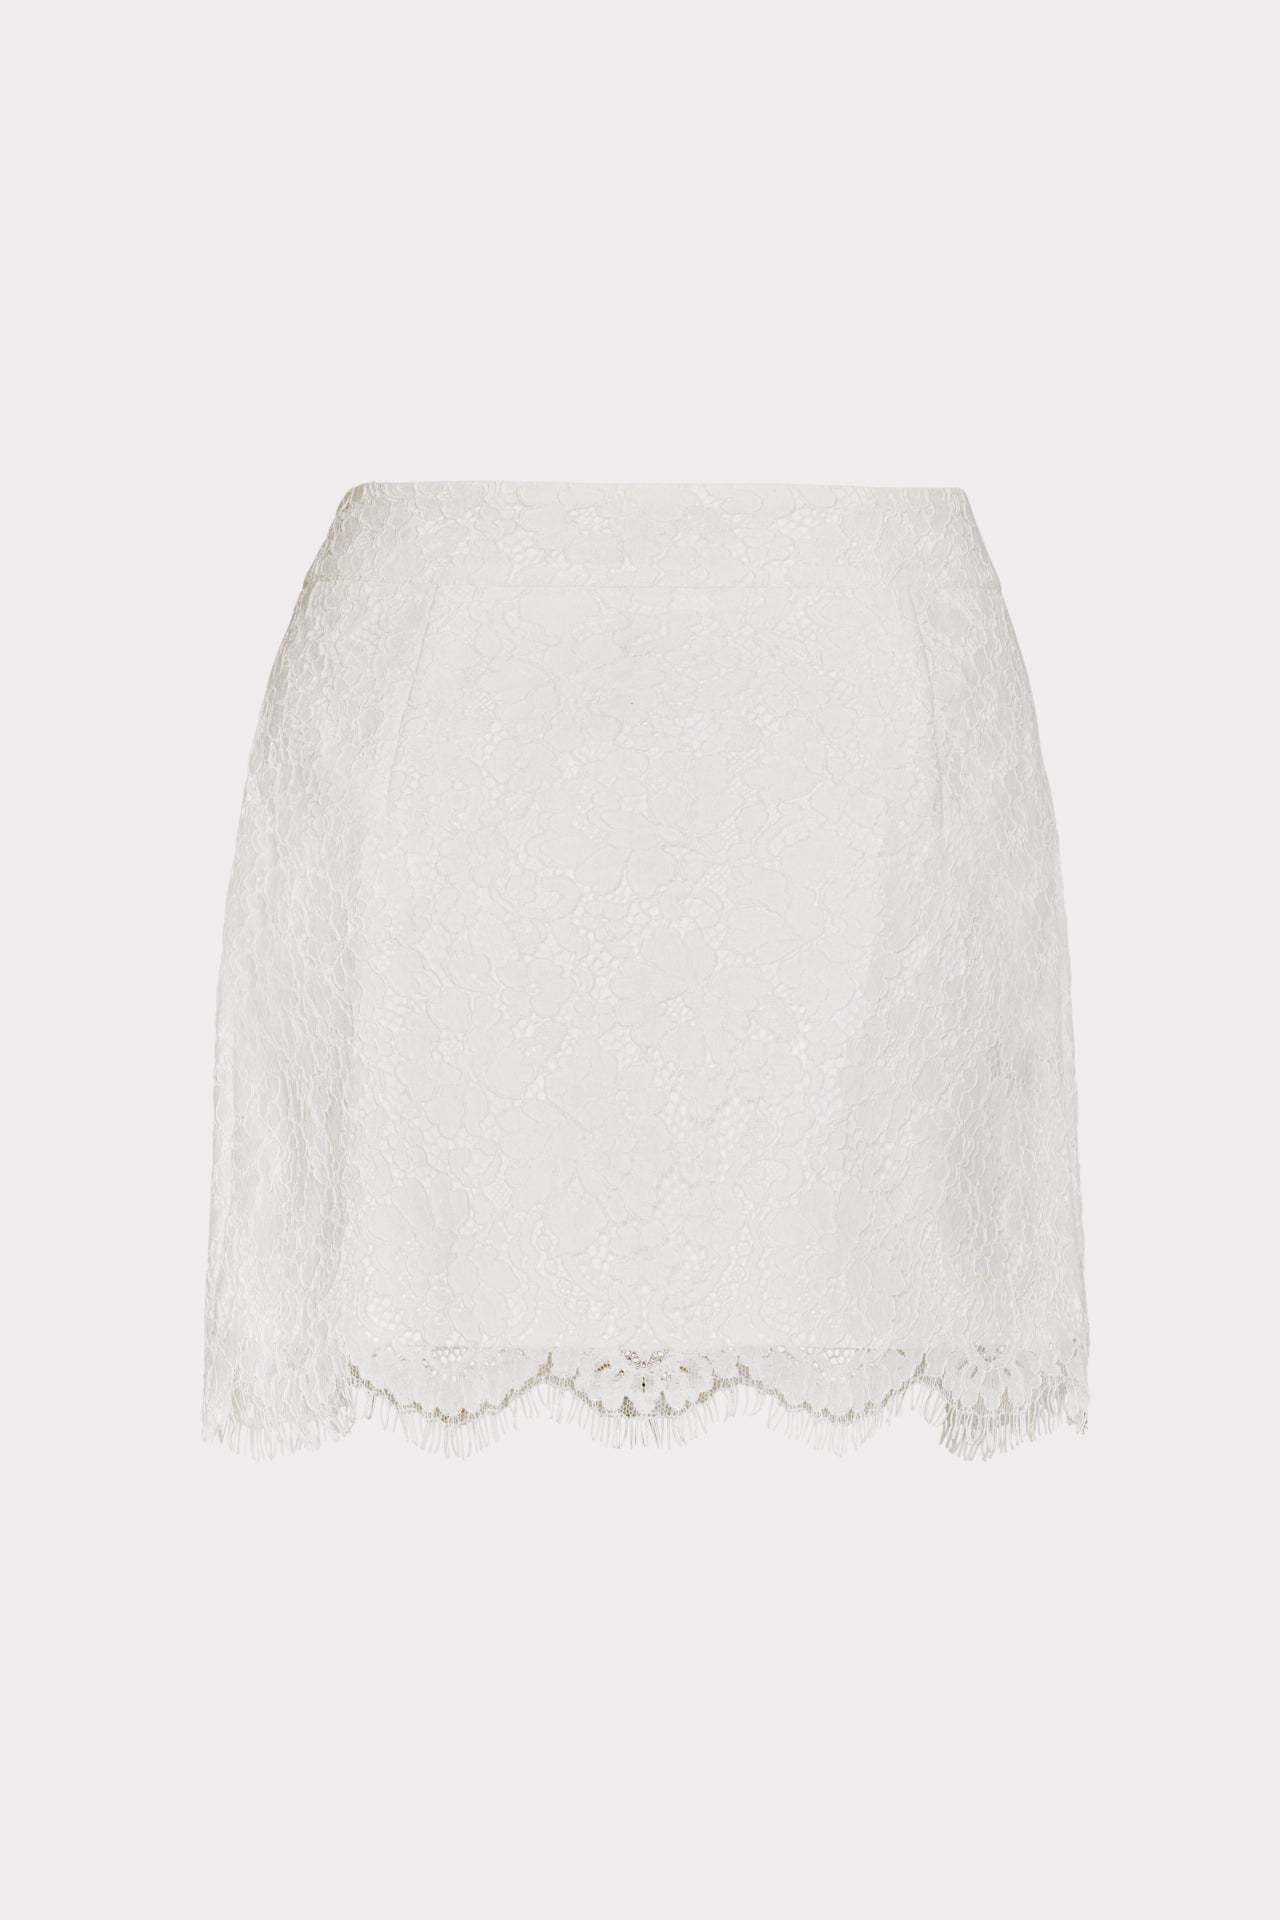 Fiore Lace Modern Mini Skirt